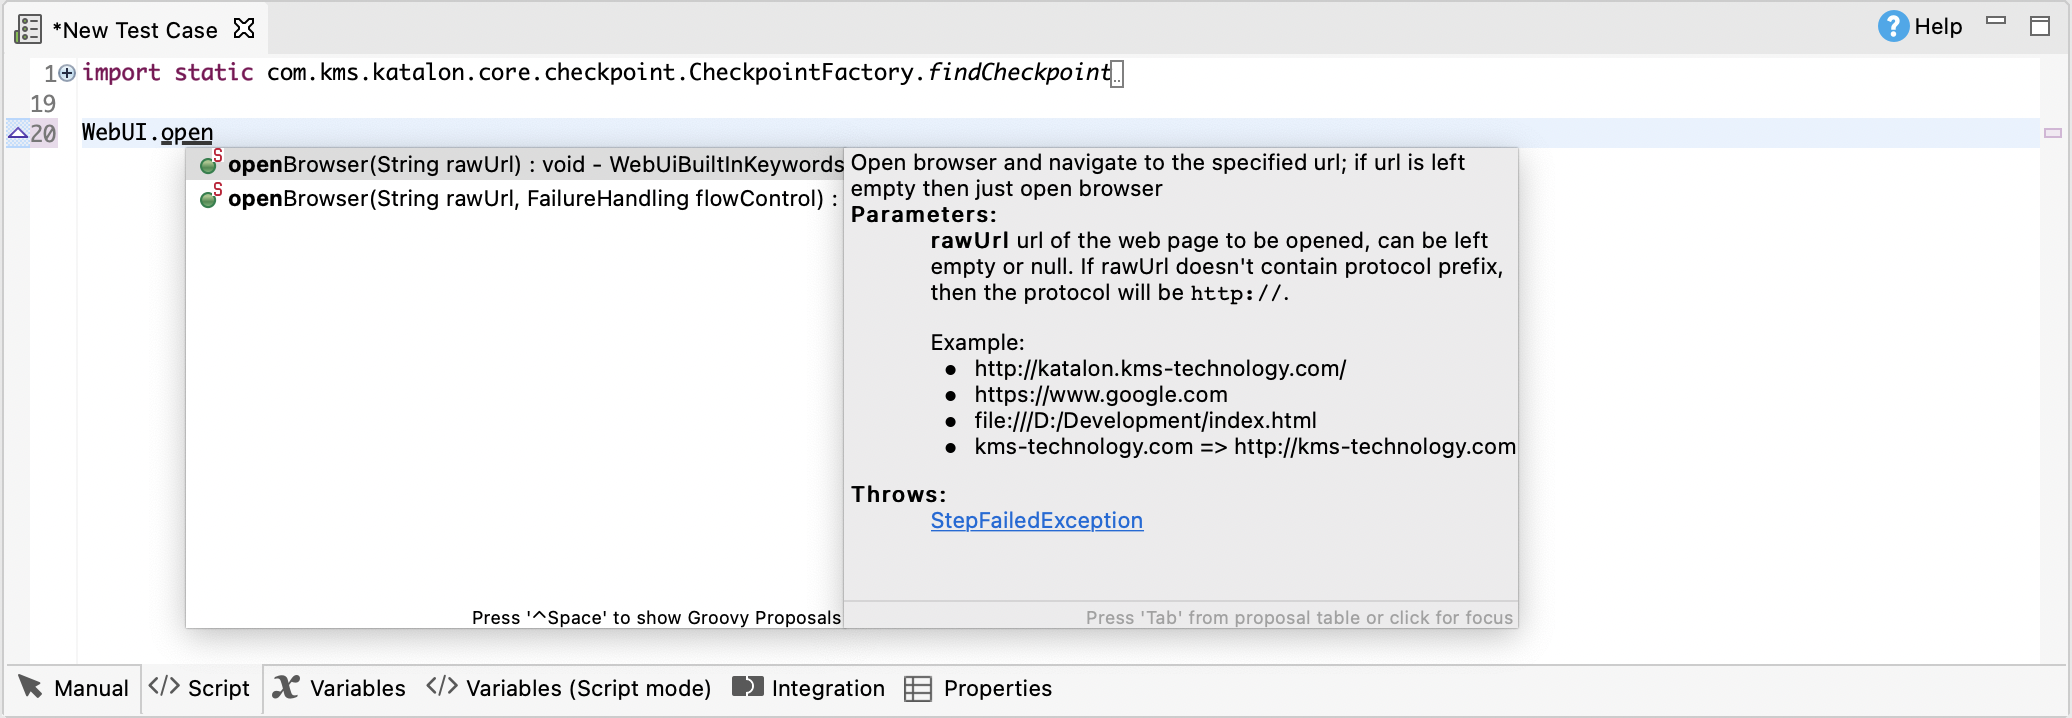 Open browser in script view